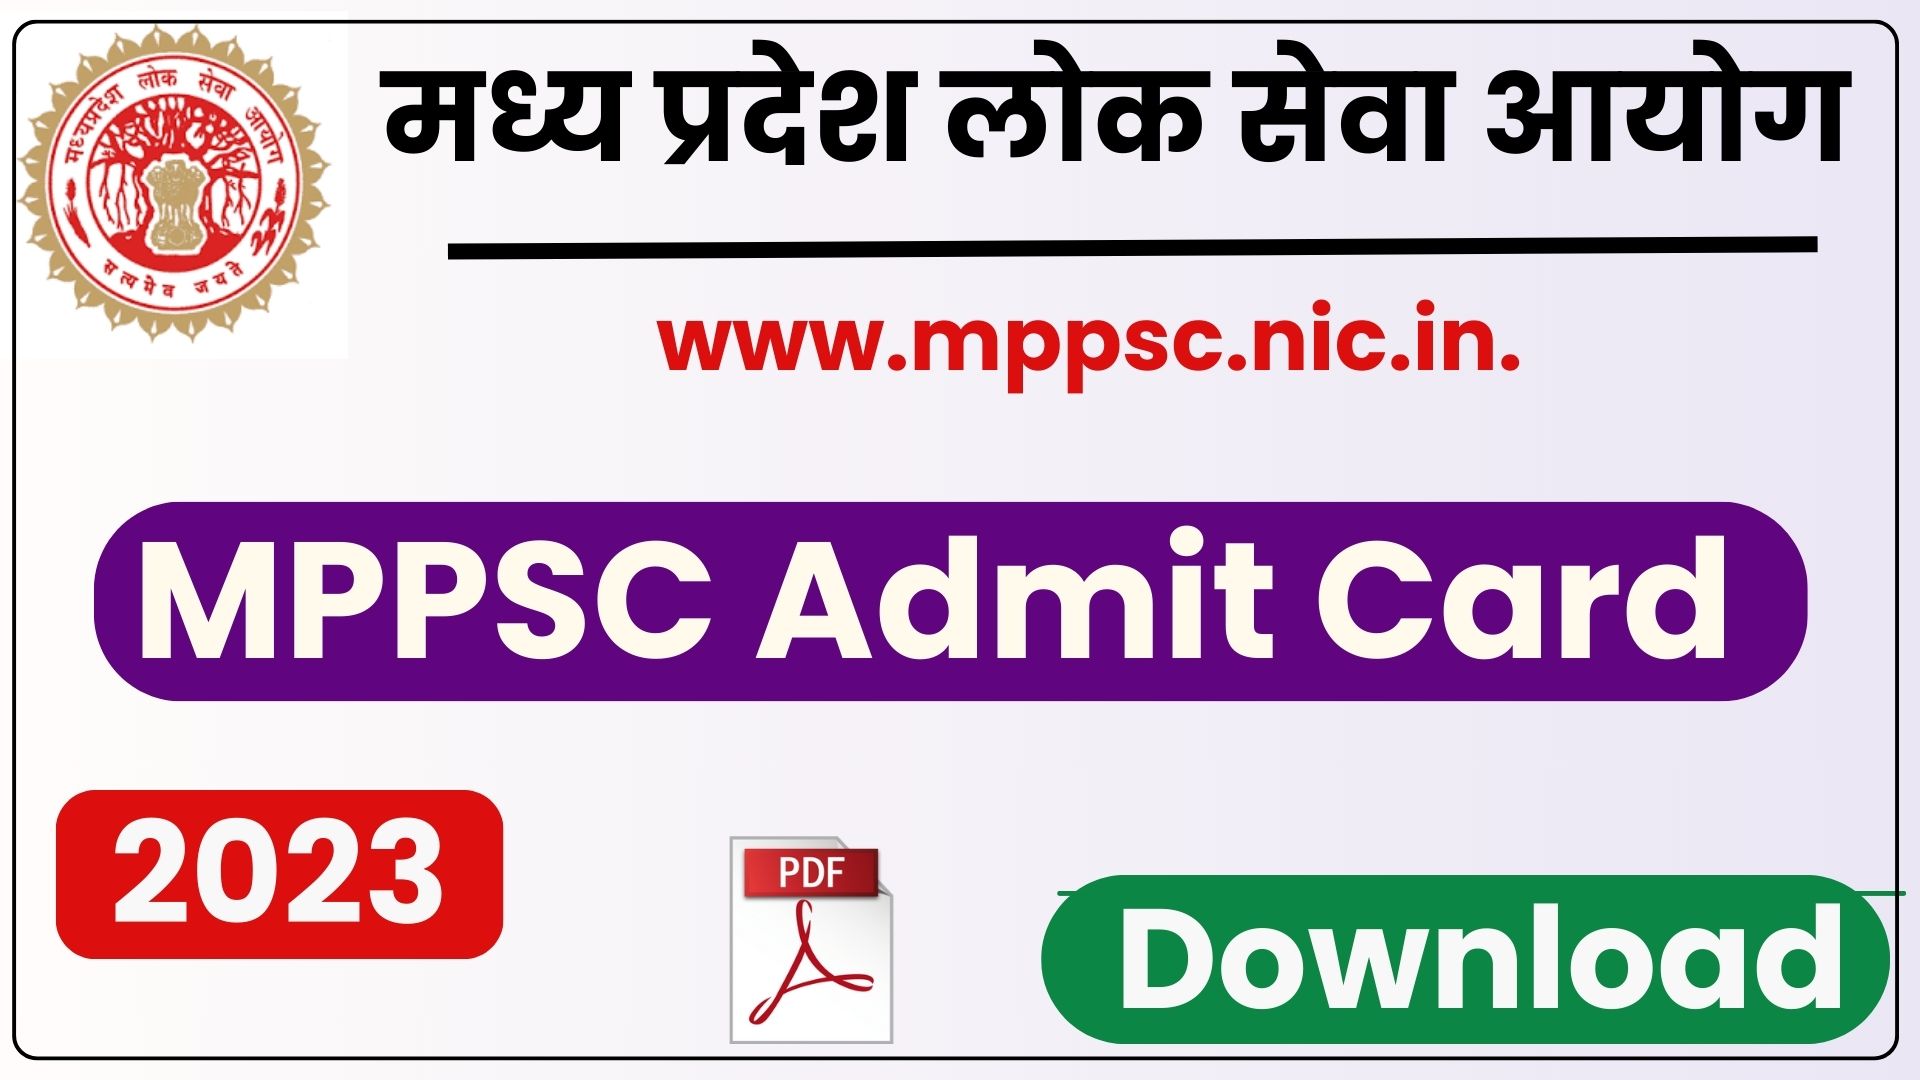 MPPSC Admit Card 2023 Download Link